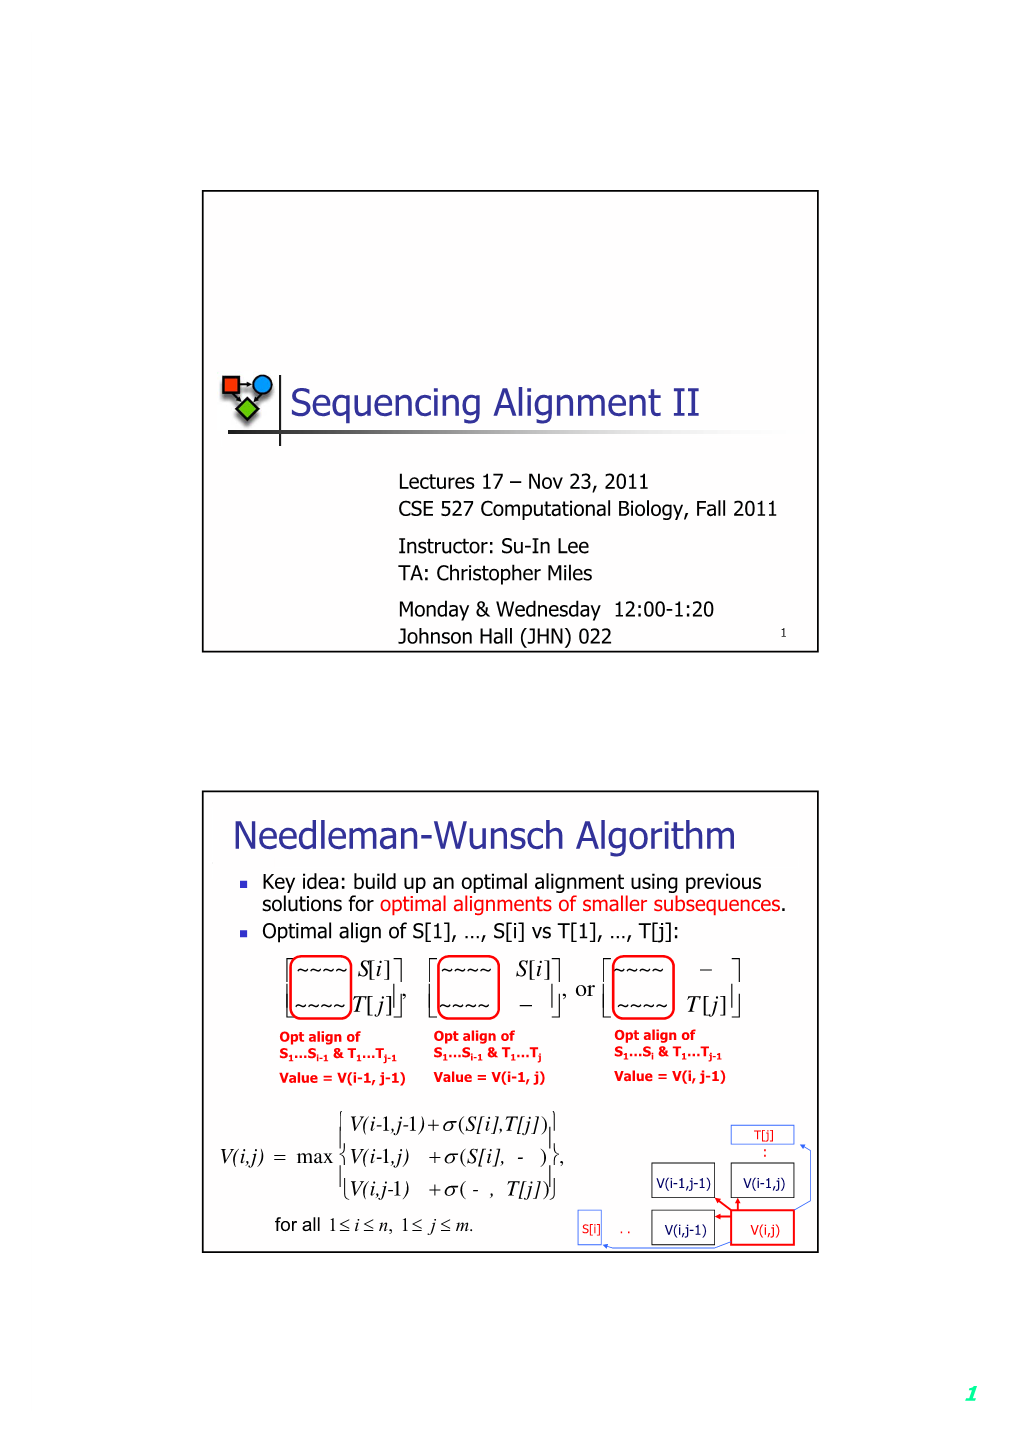 Sequencing Alignment II Needleman-Wunsch Algorithm